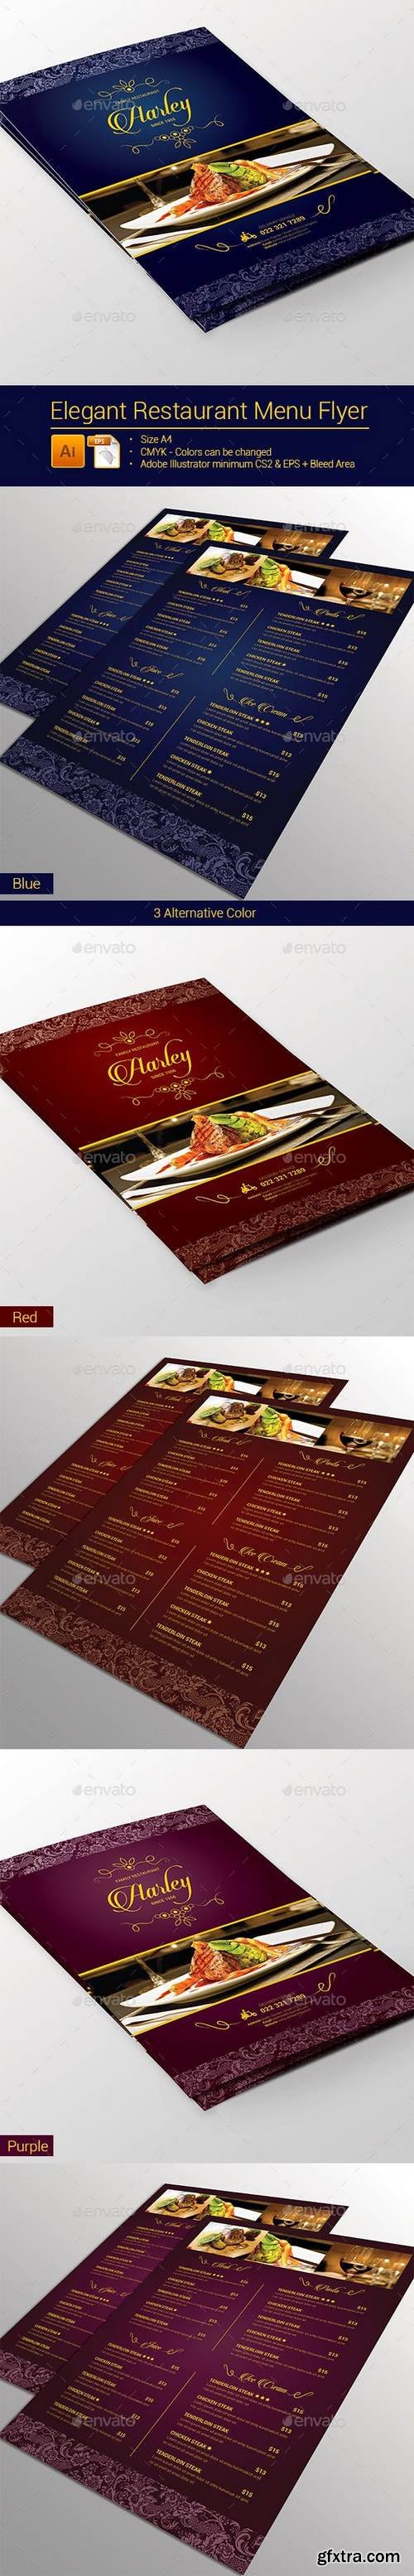 Graphicriver - Elegant Restaurant Menu Flyer 9219720